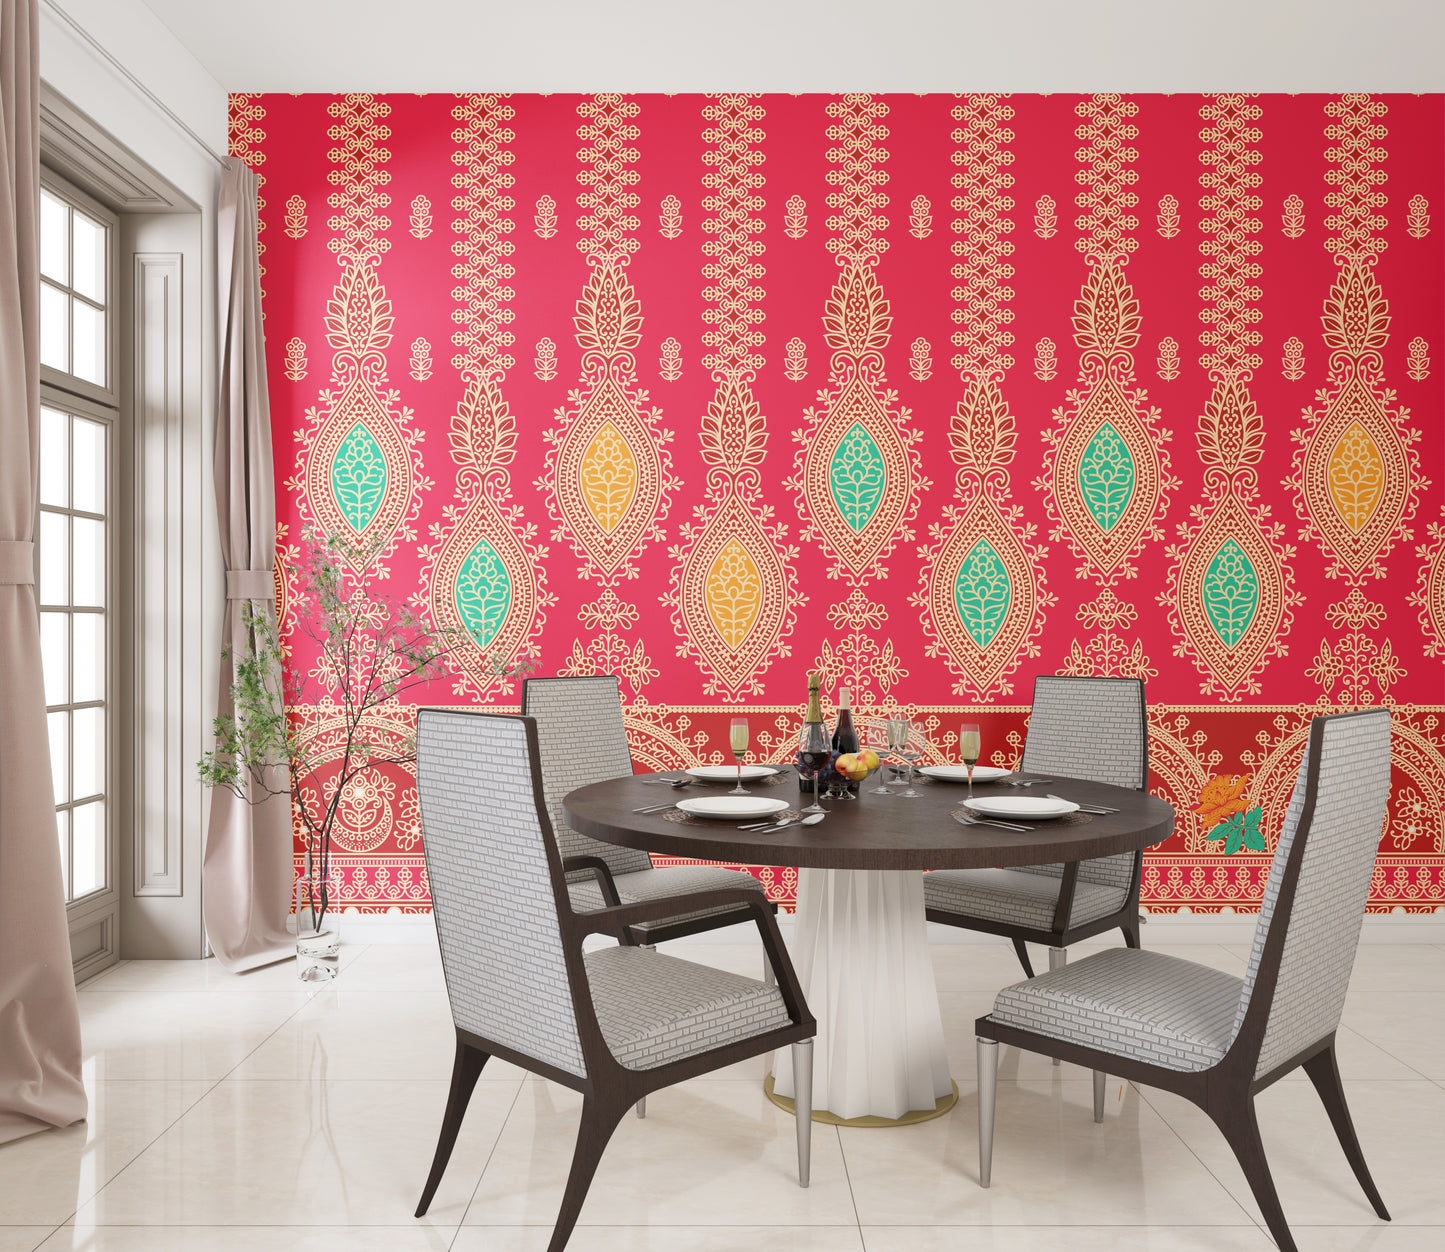 Digital textile design ornament pattern wallpaper for wall